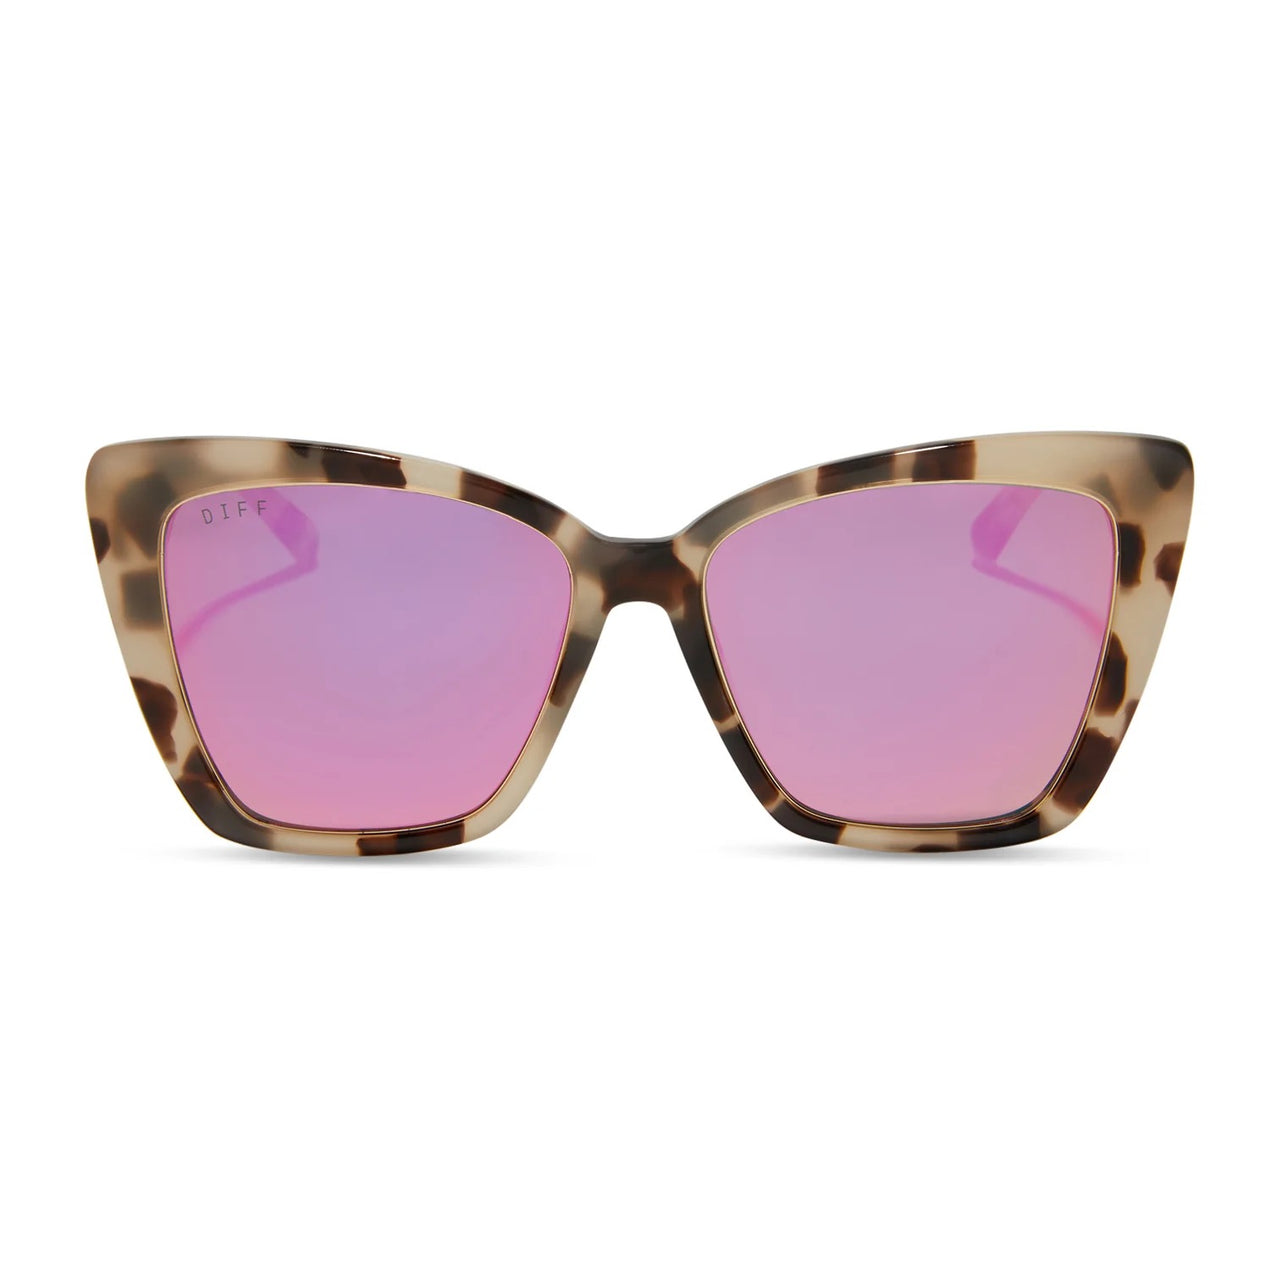 Becky iv - cream tortoise + pink mirror sunglasses